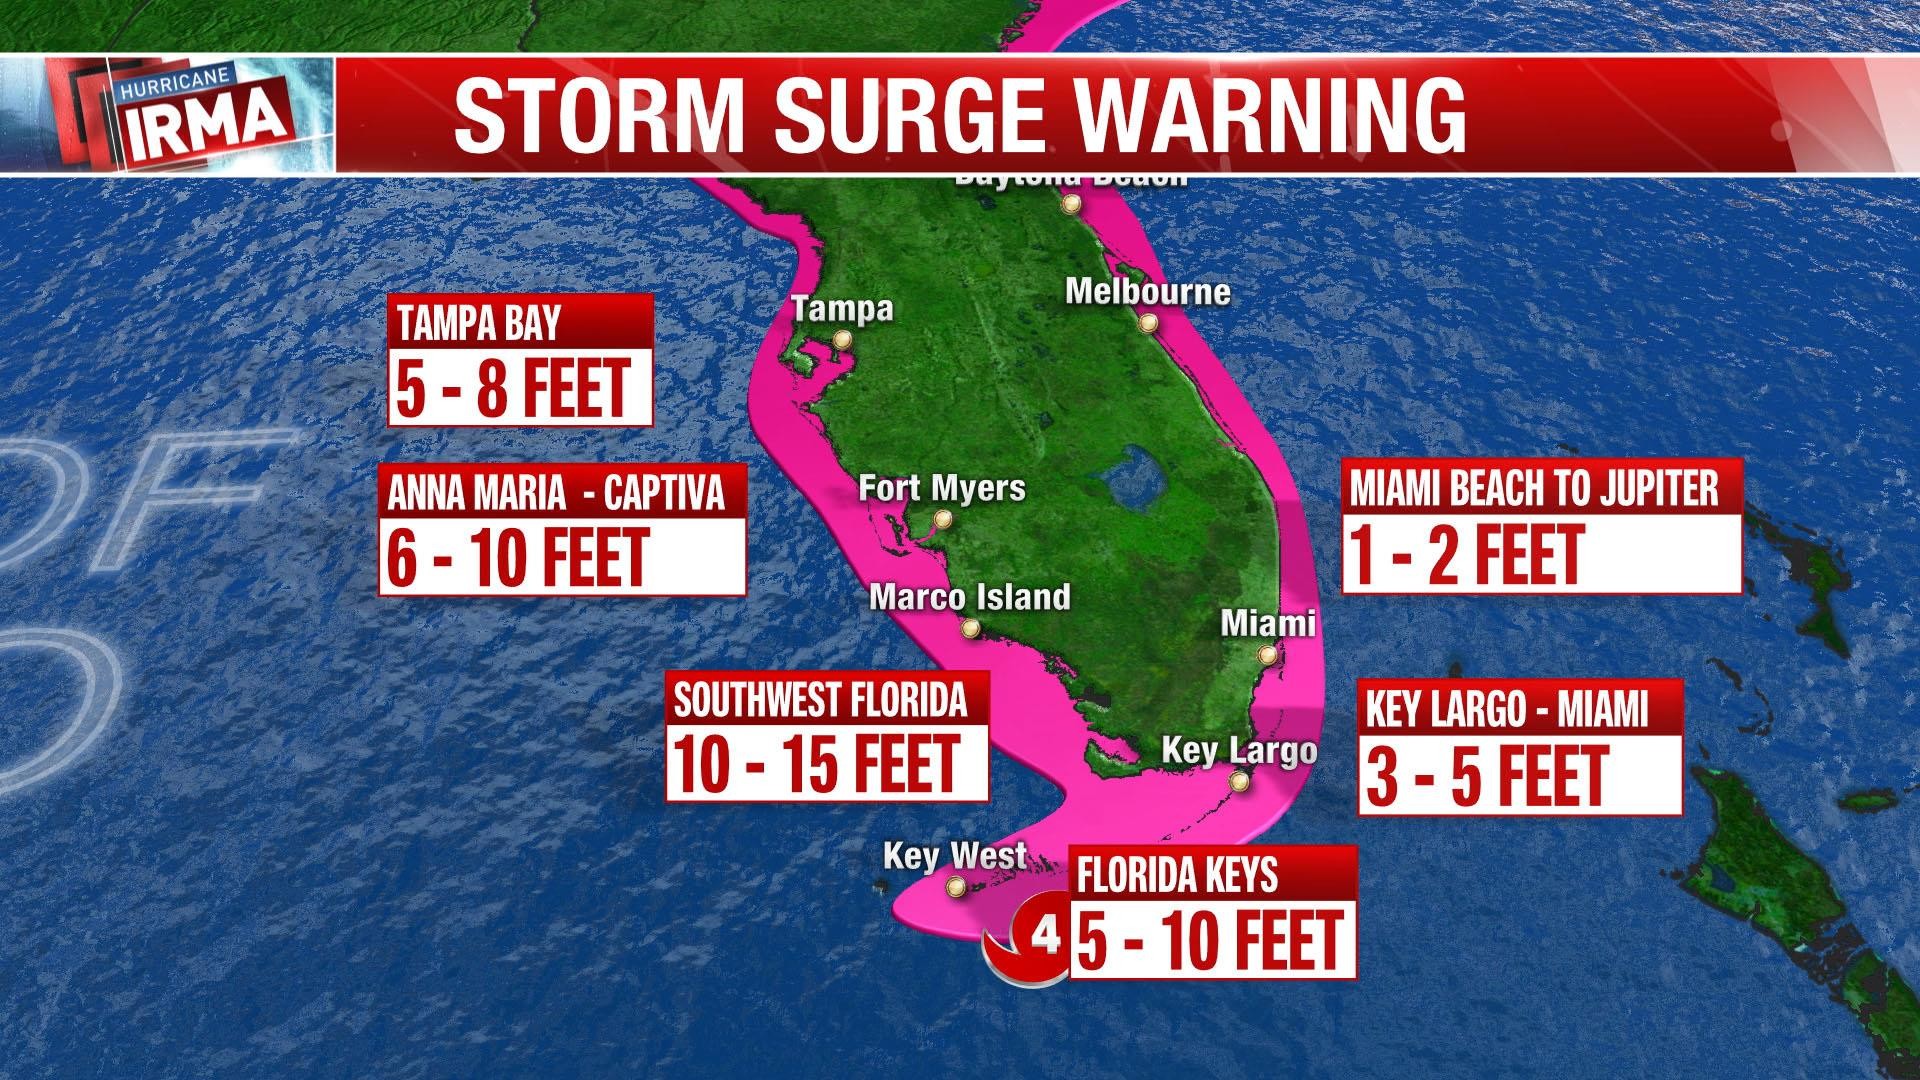 1920x1080 Hurricane Irma could bring 10-foot storm surge to Florida Keys - TODAY.com